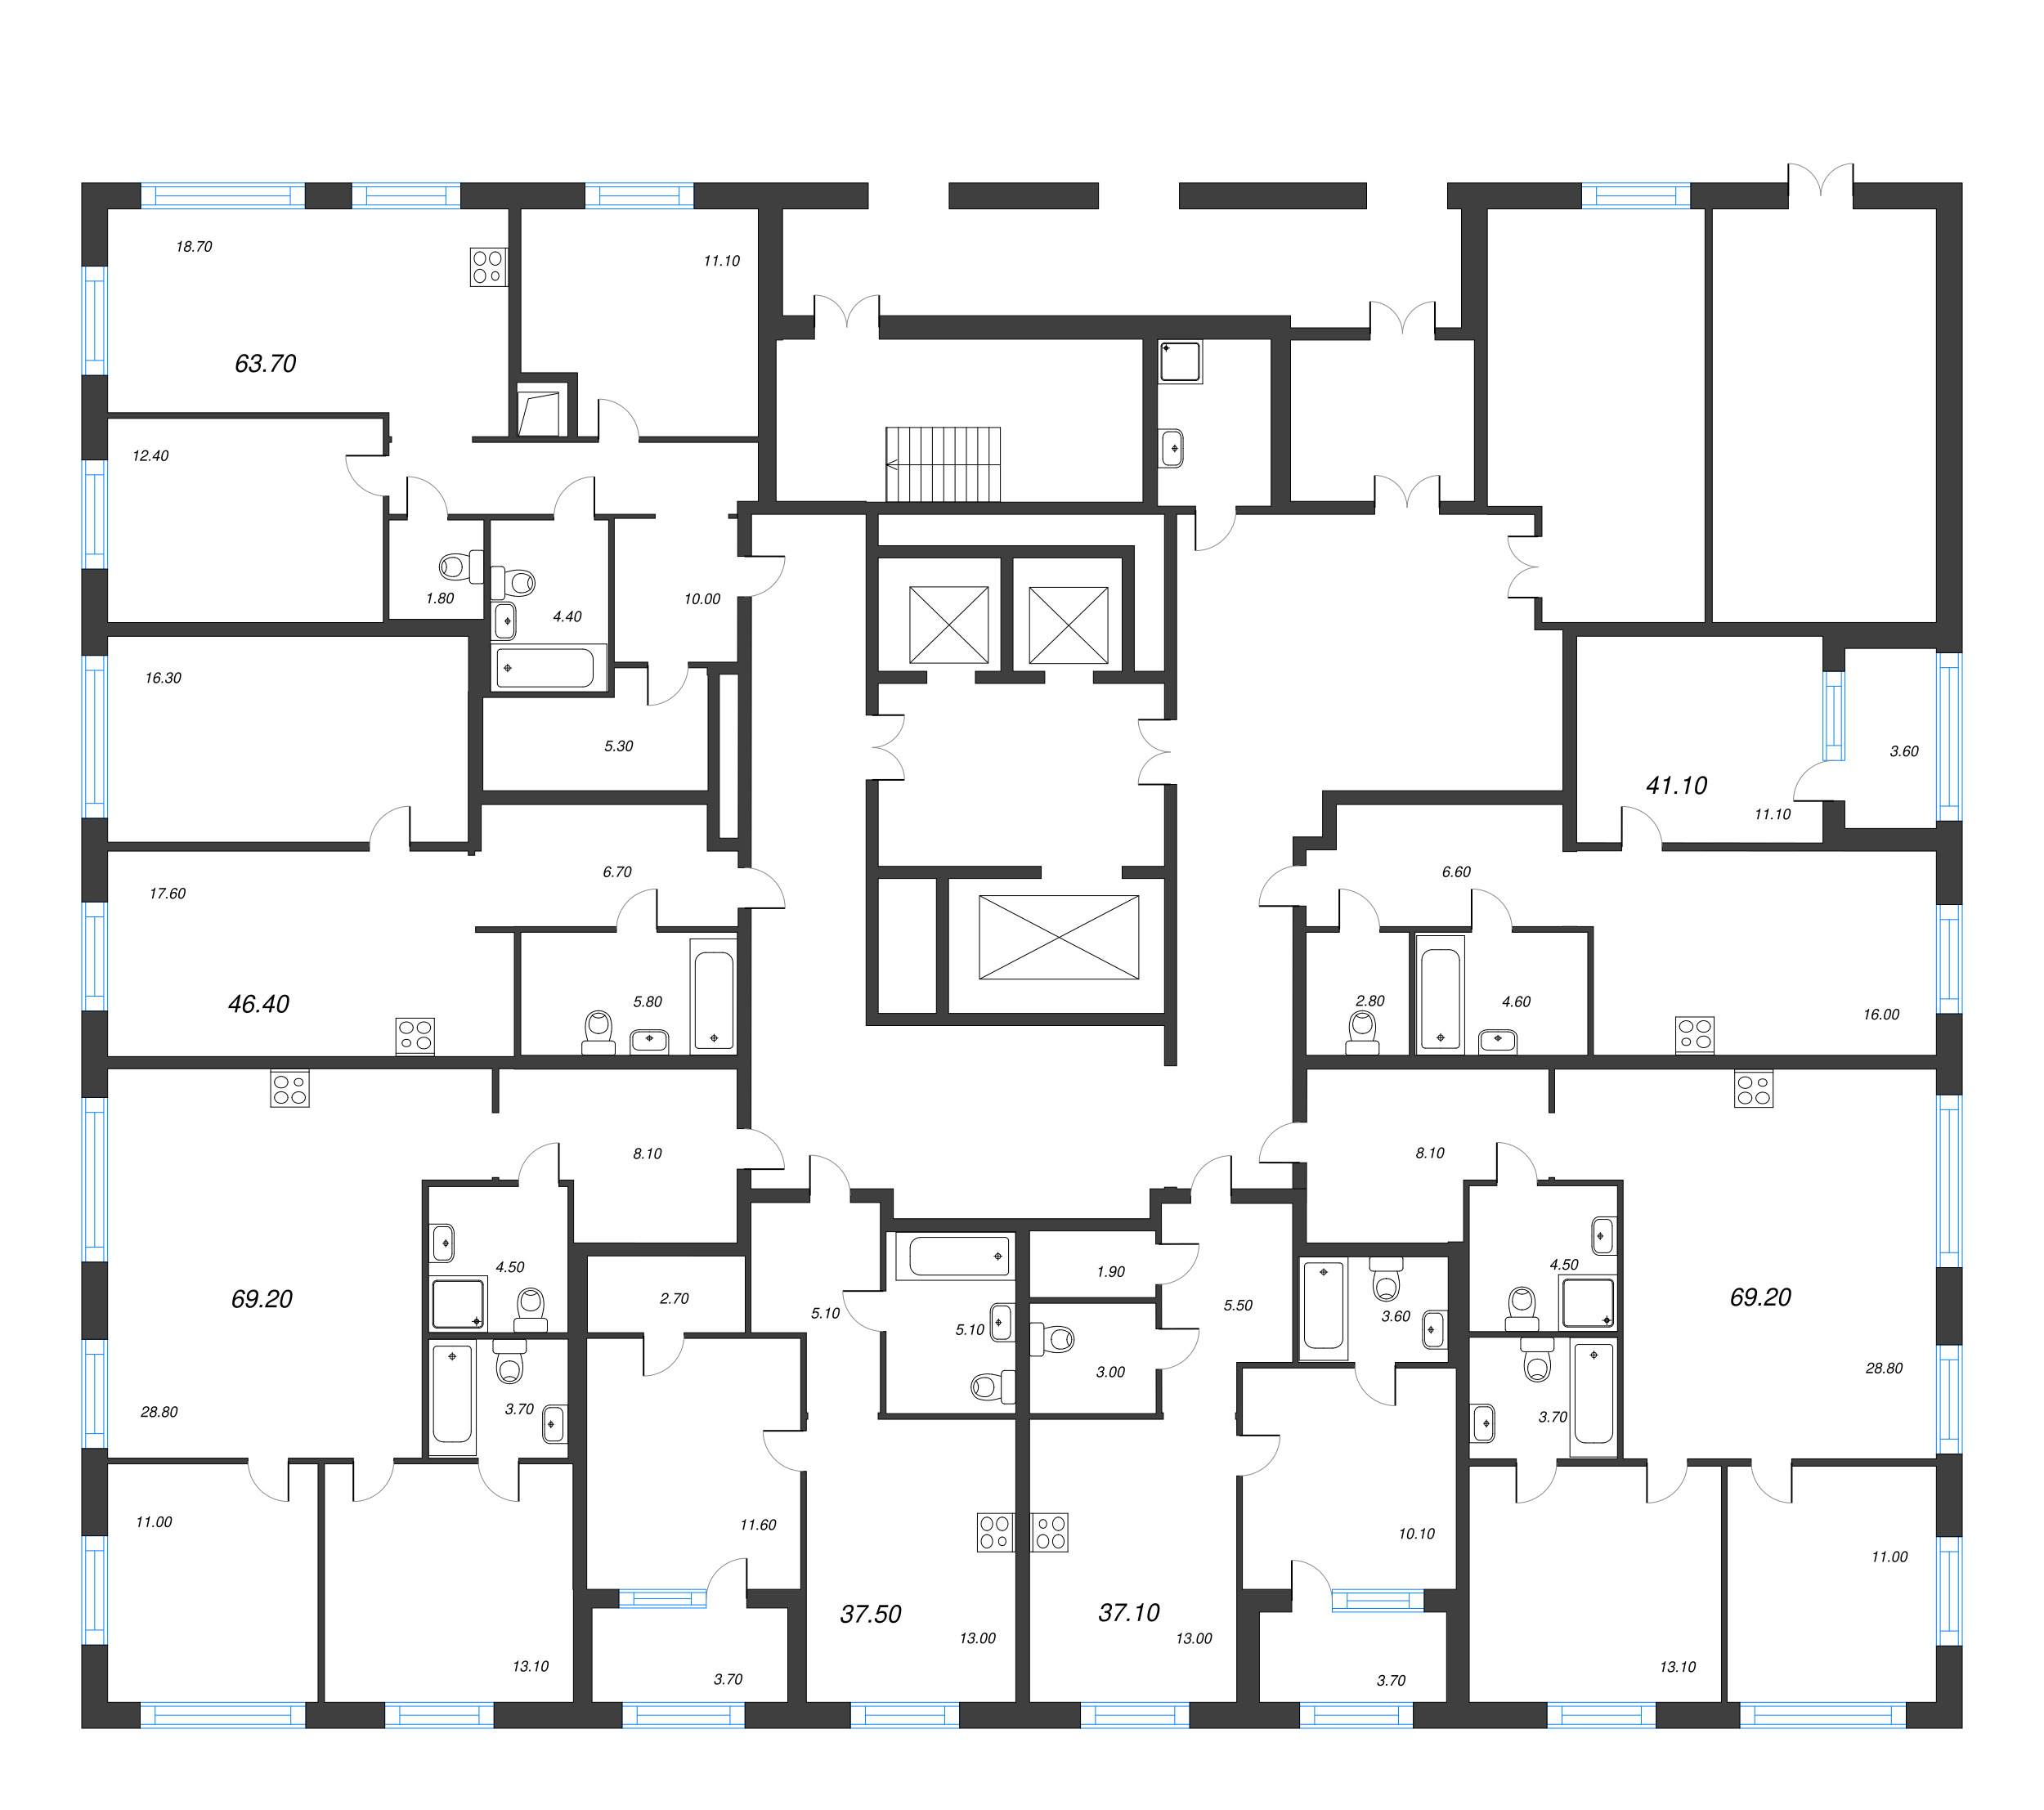 3-комнатная (Евро) квартира, 63.7 м² - планировка этажа